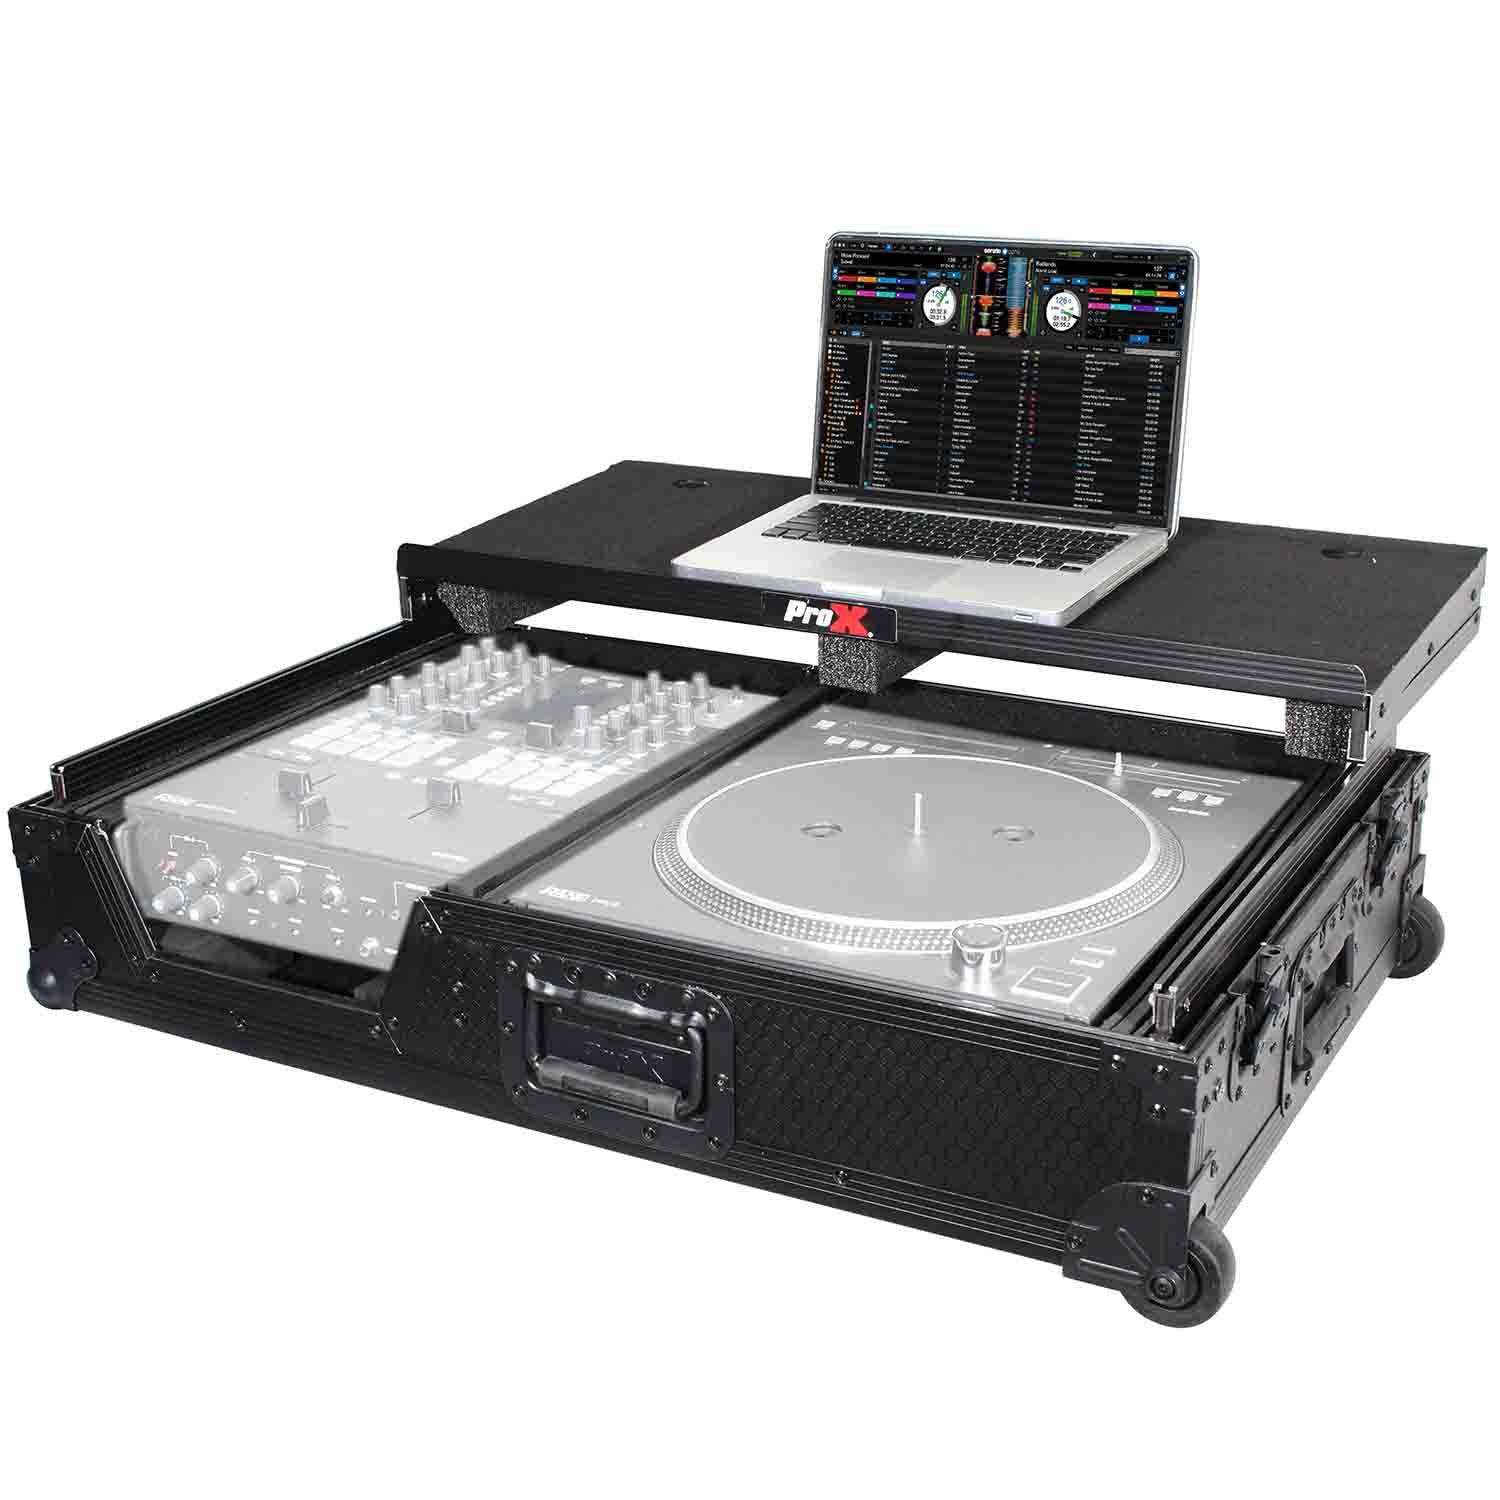 ProX XS-TMC1012WLTBL DJ Flight Case For Single Turntable and Mixer - Black on Black - Hollywood DJ